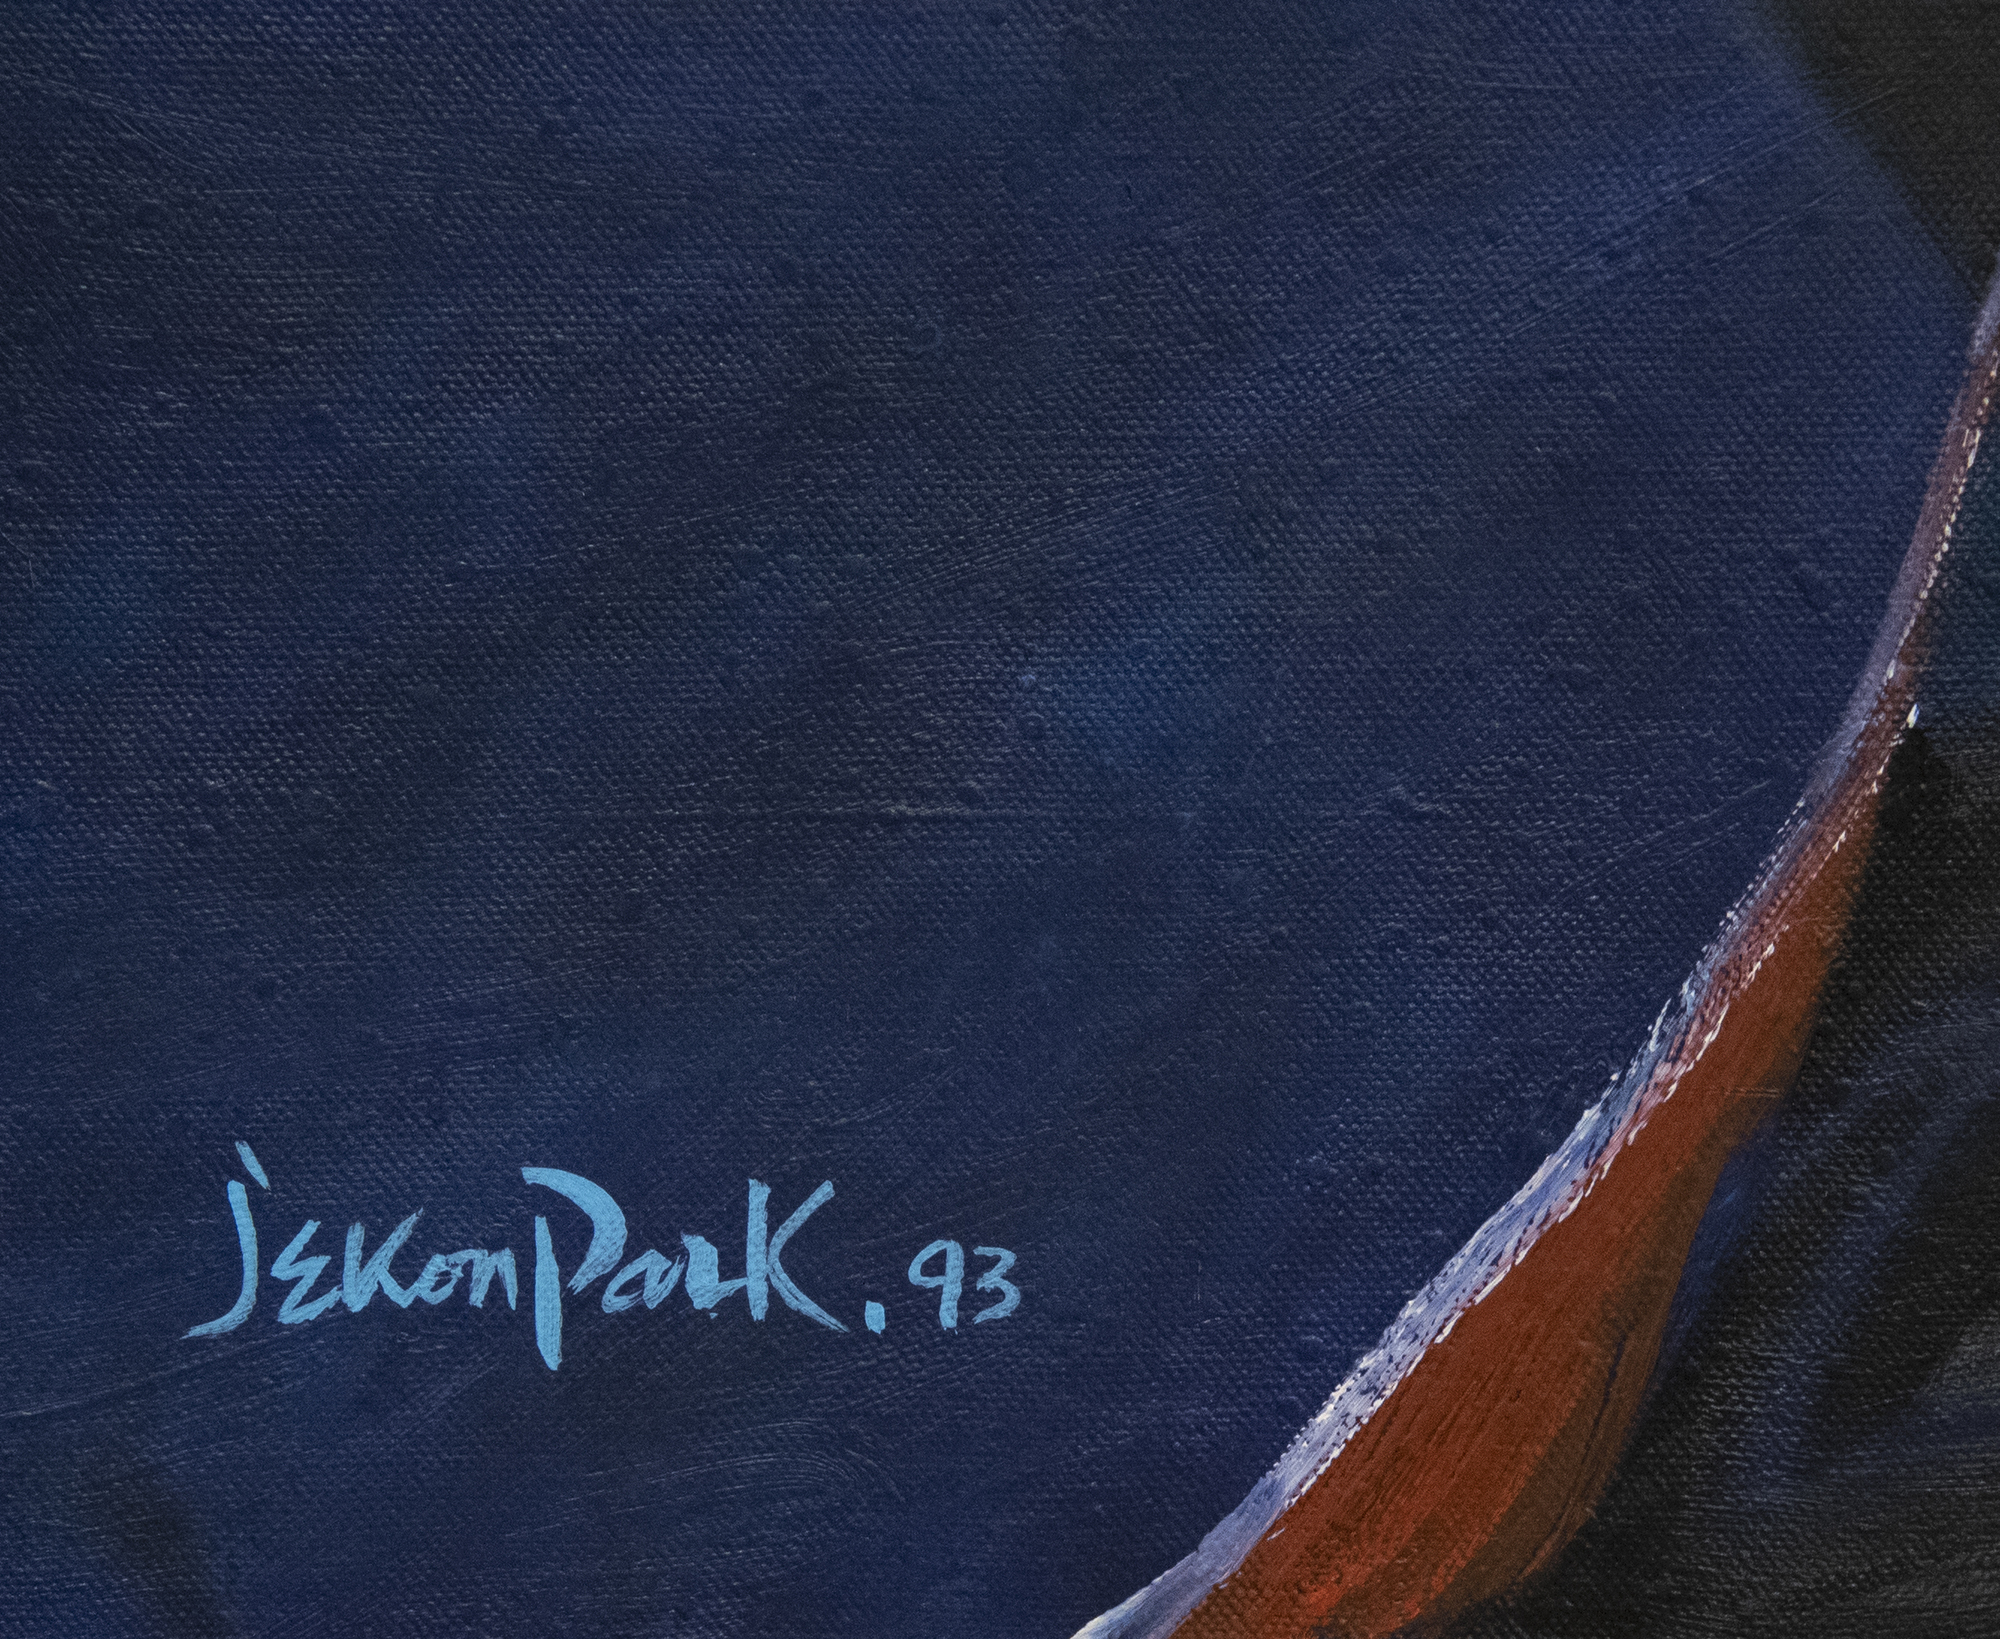 JAE KON PARK - Untitled - oil on canvas - 36 x 45 1/2 in.